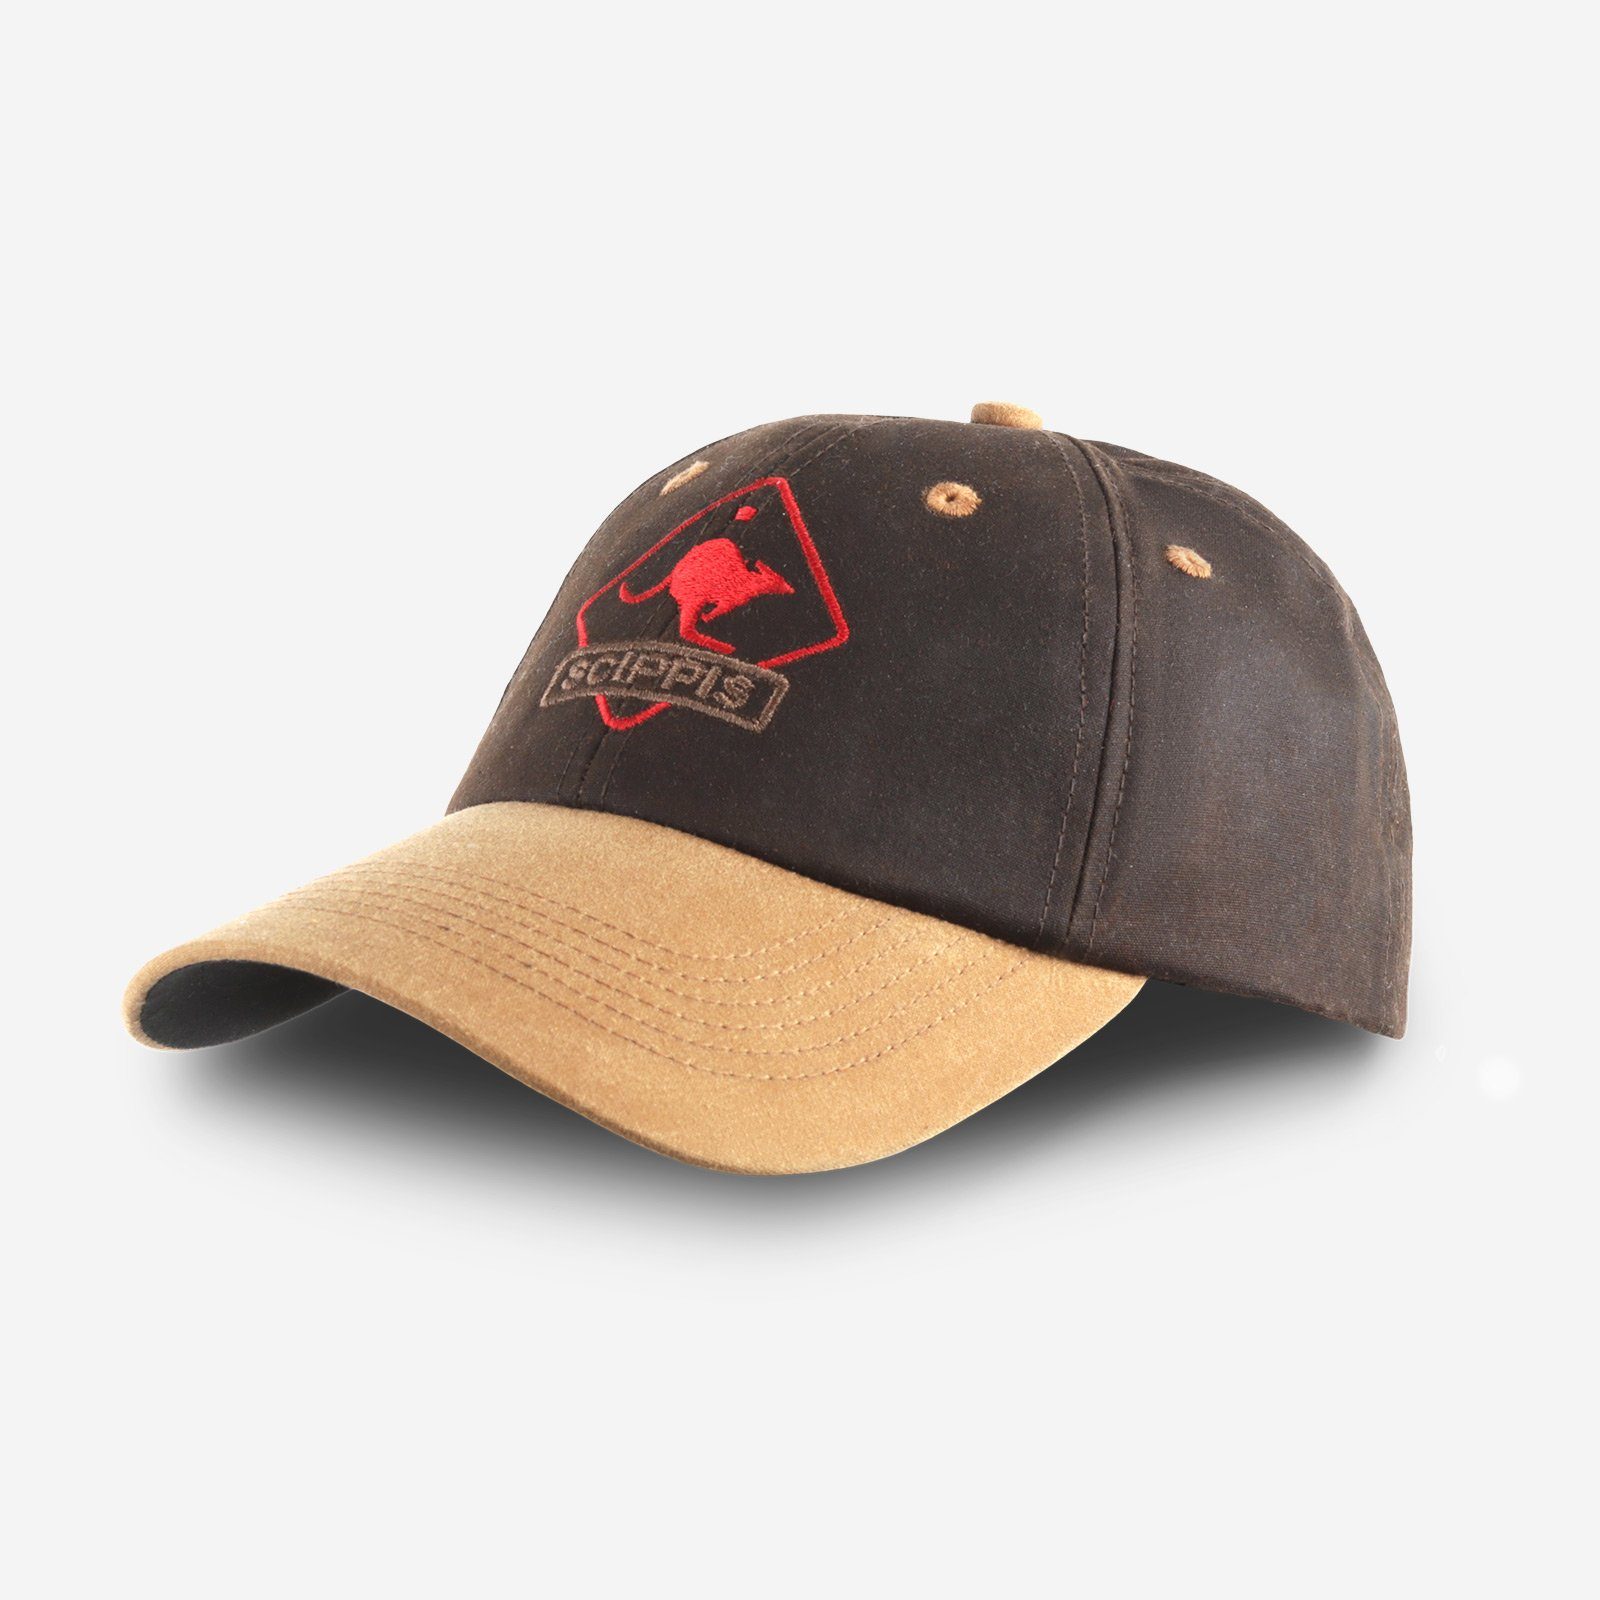 Scippis Baseball Cap OILSKIN CAP Extrem wasserabweisend, windundurchlässig atmungsaktiv tan/brown